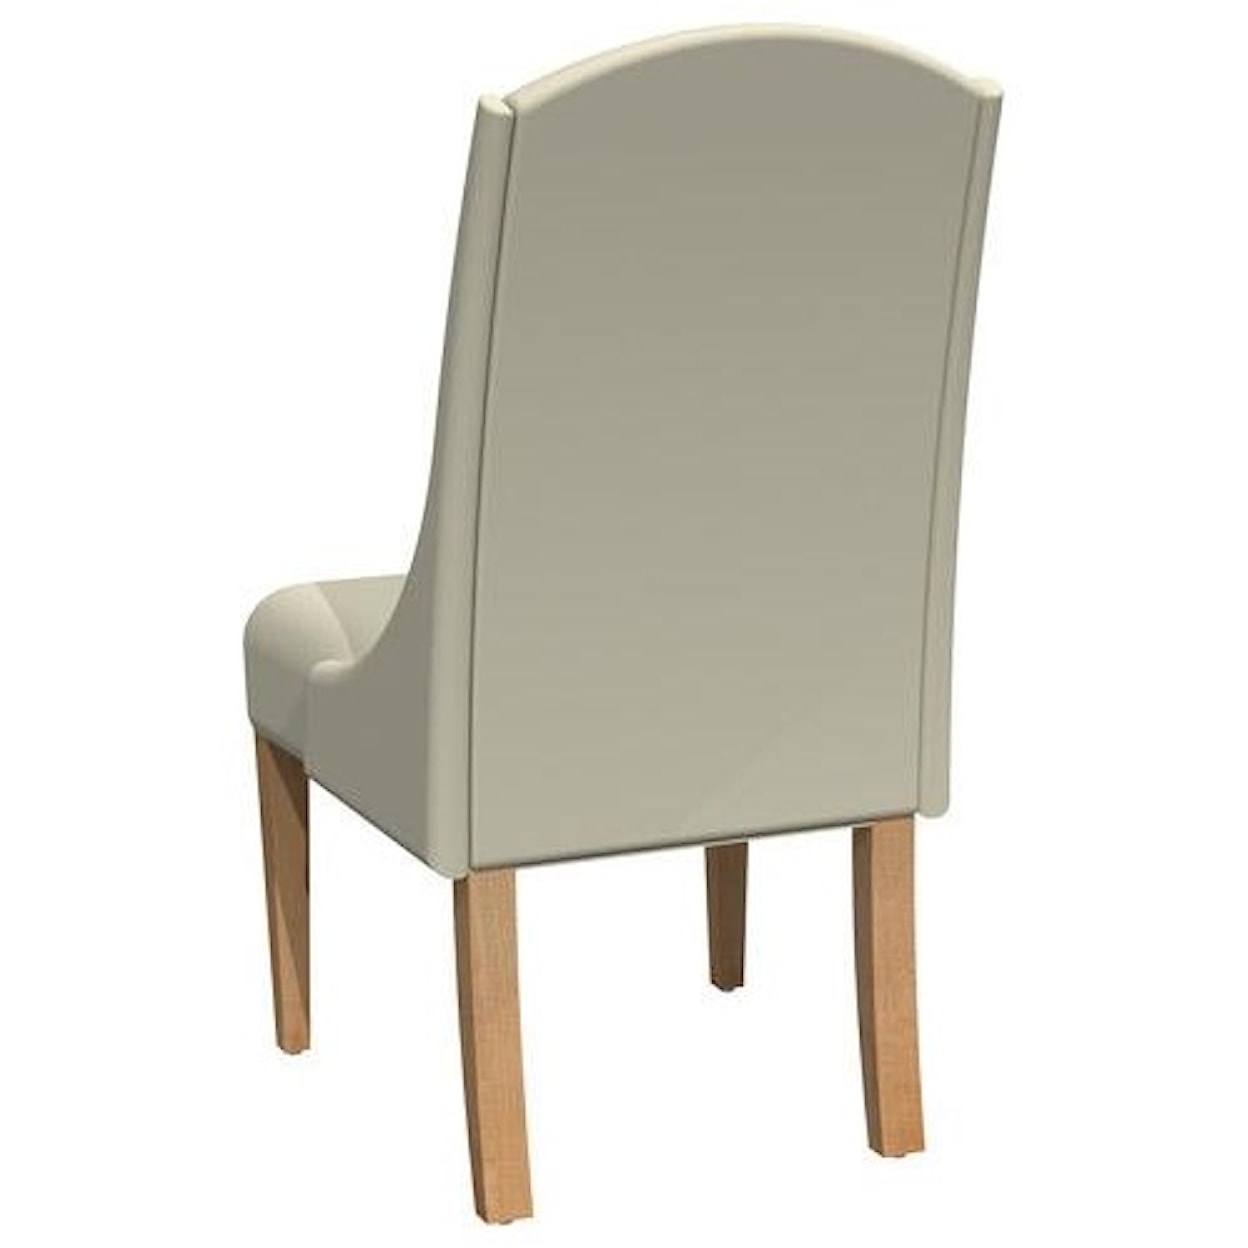 Bermex CB-1596 Side Chair